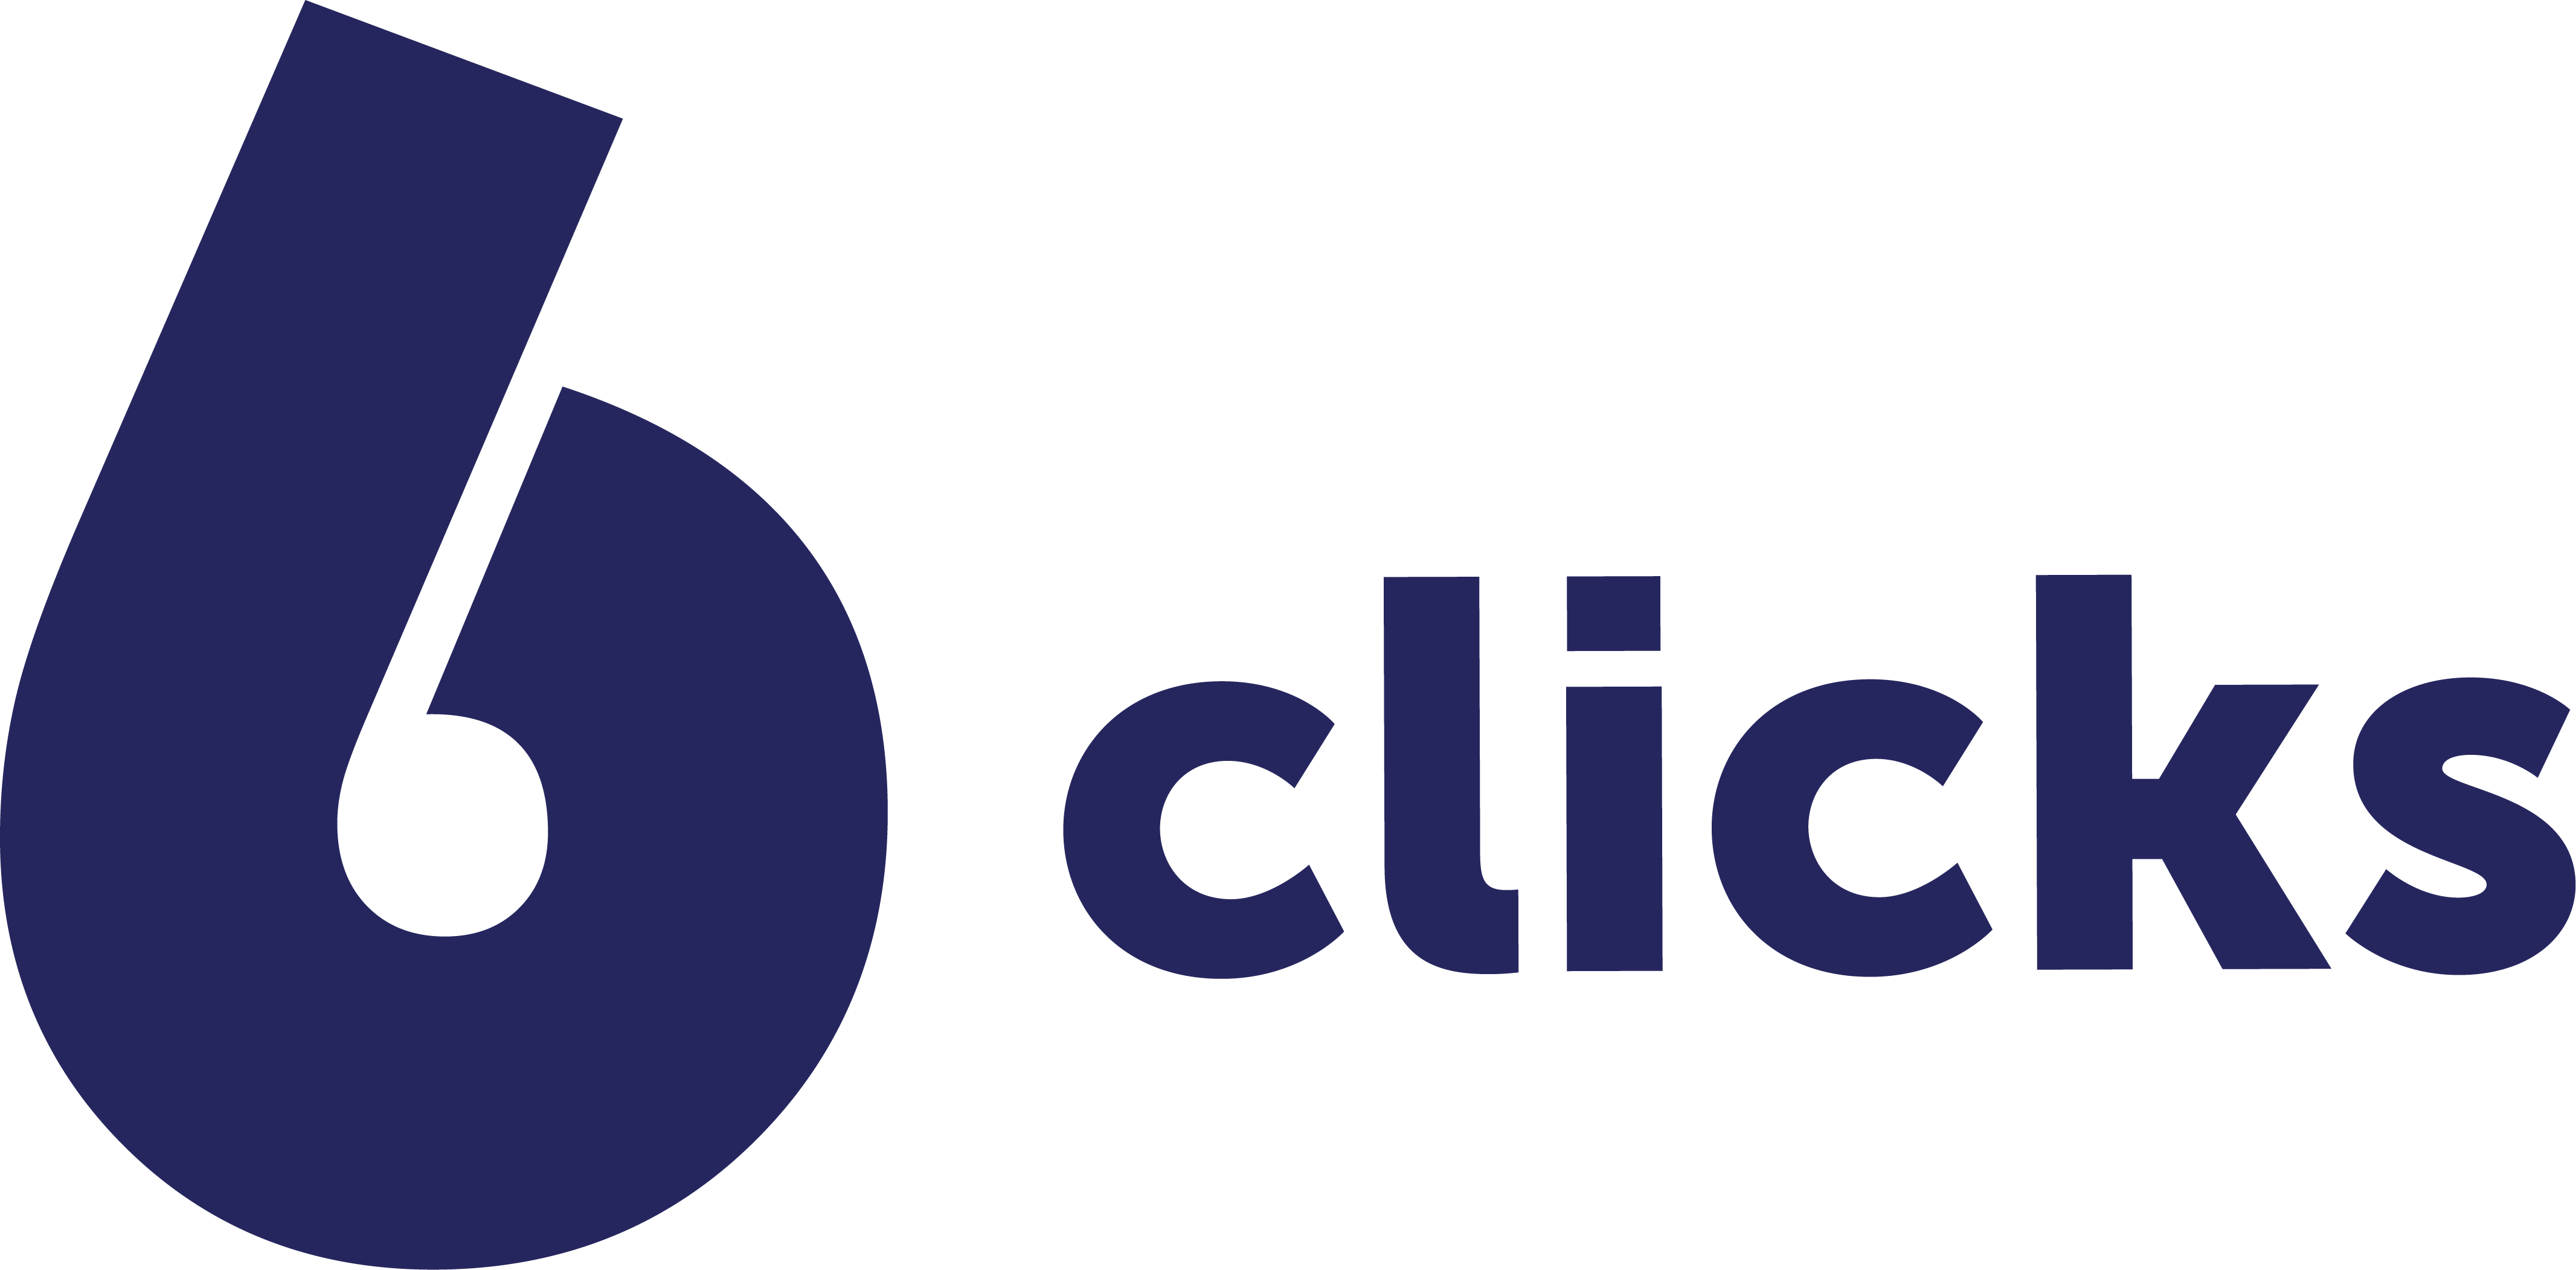 6clicks-Logo